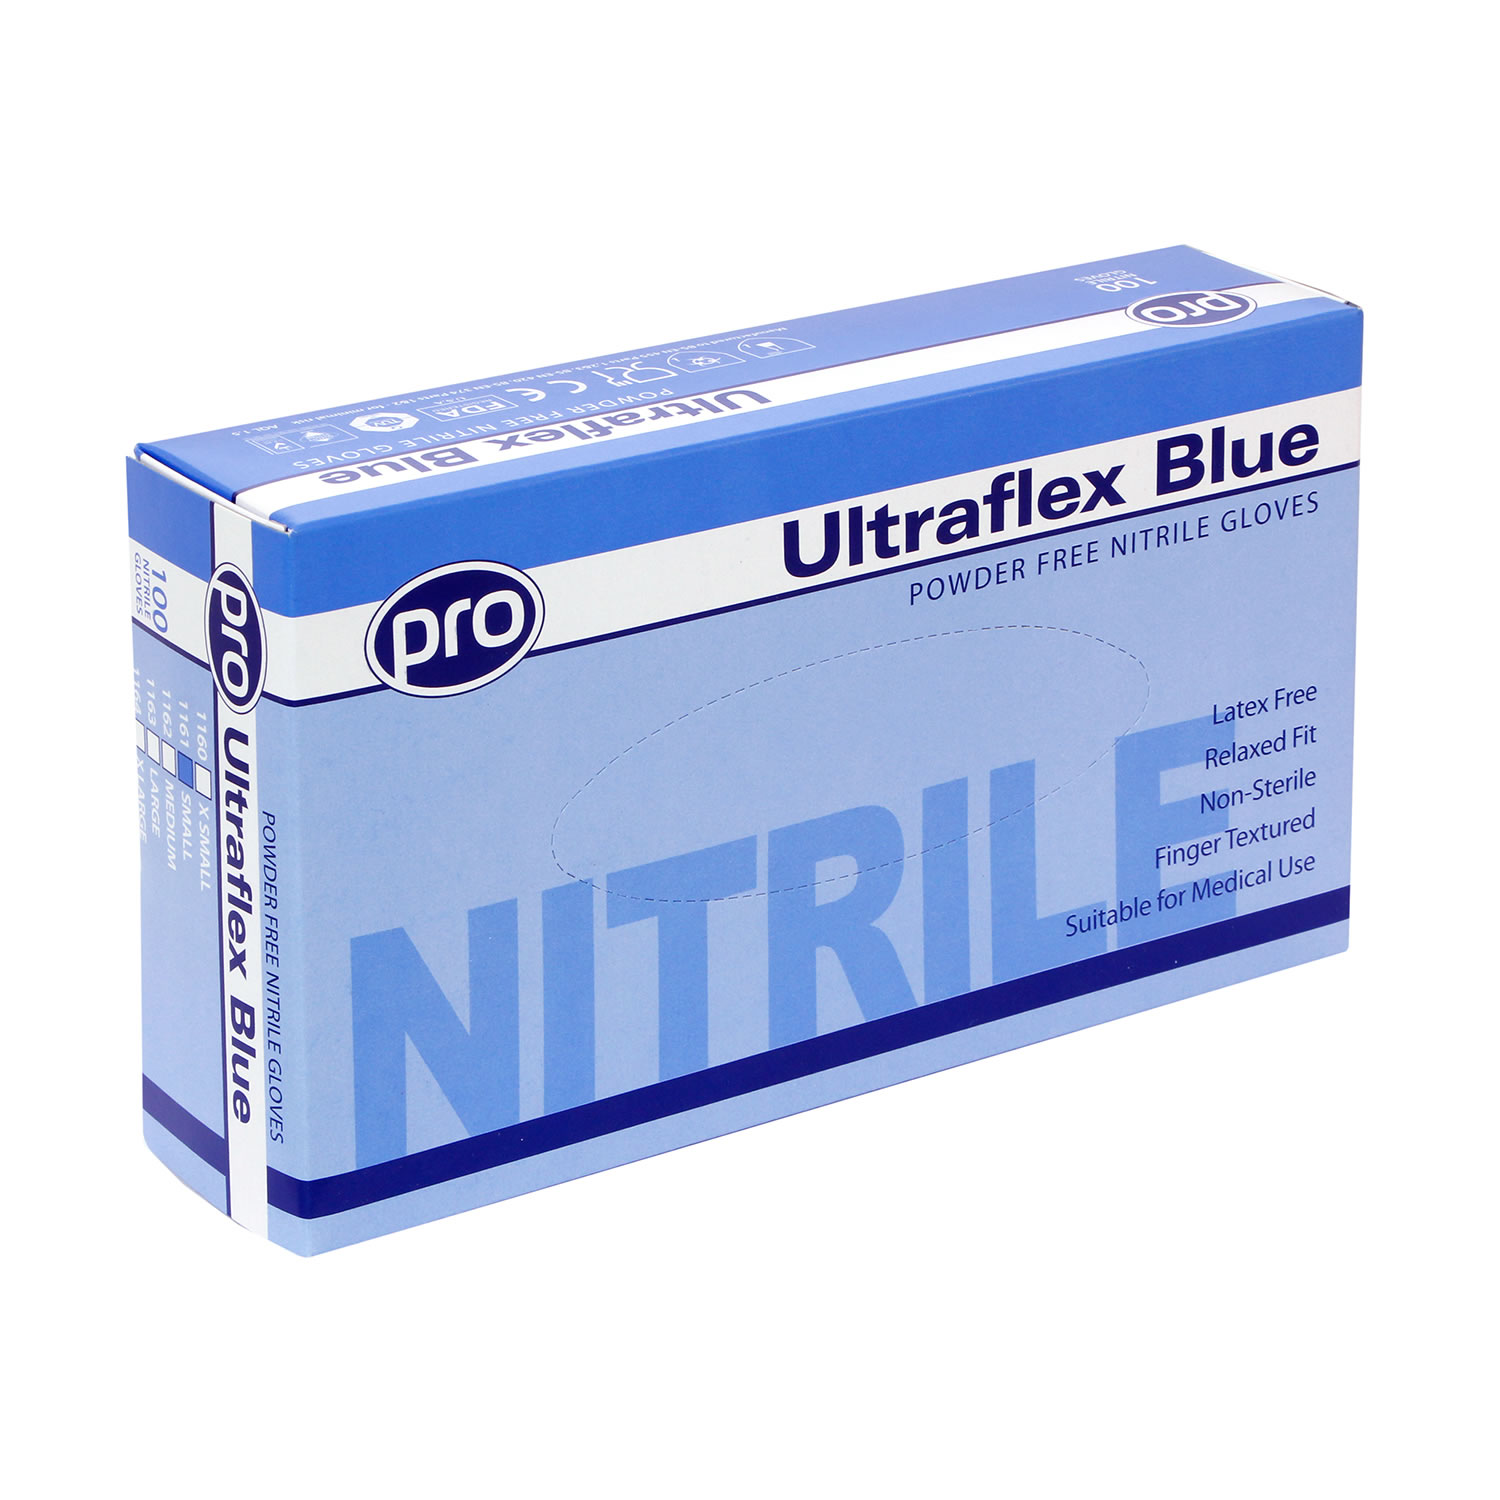 ULTRAFLEX NITRILE POWDER FREE BLUE 100 PACK